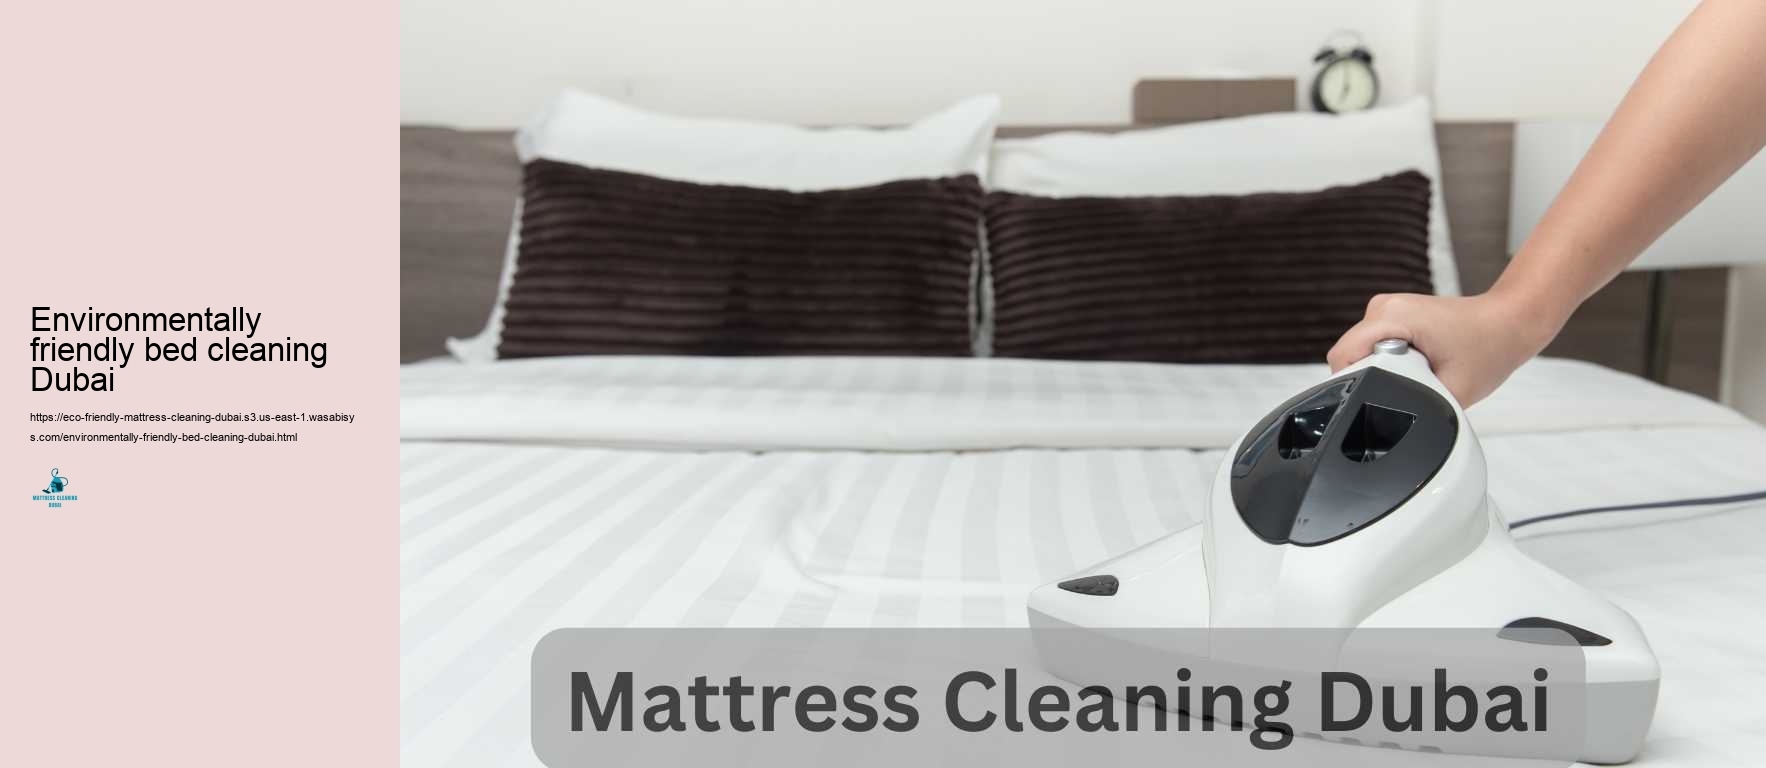 Environmentally friendly bed cleaning Dubai